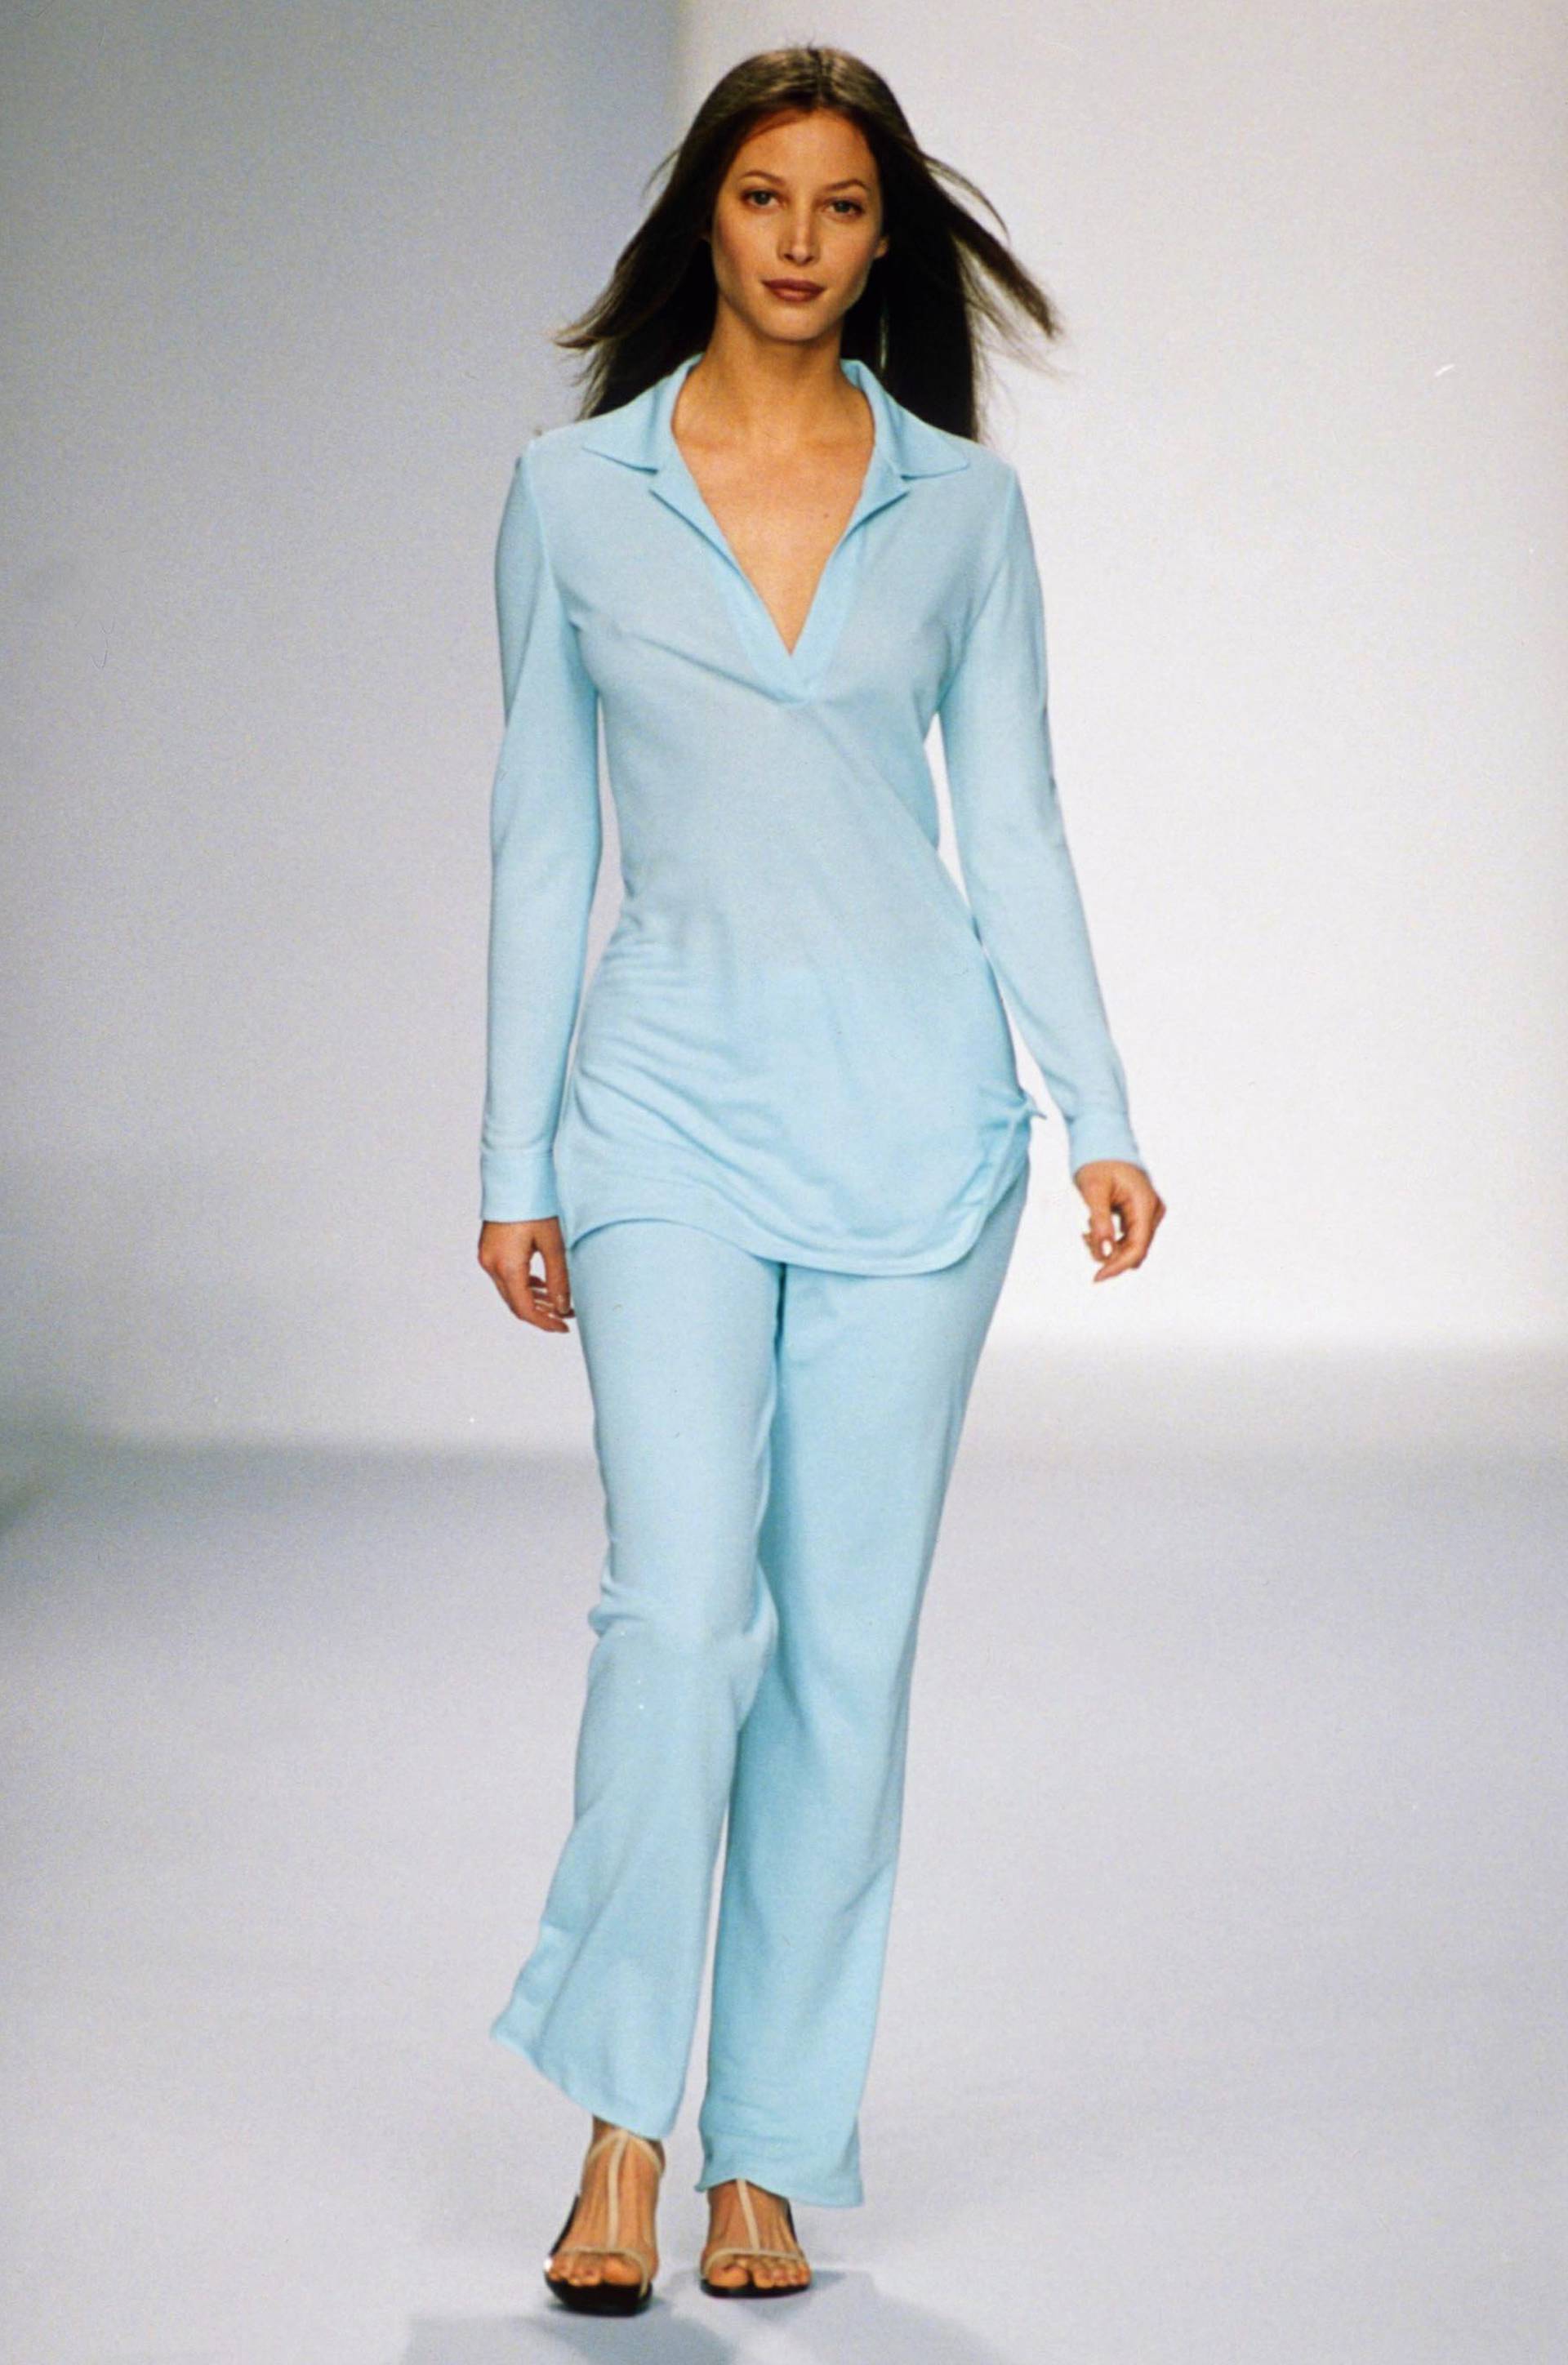 Spring Summer Fashion Shows, New York, America - 1995